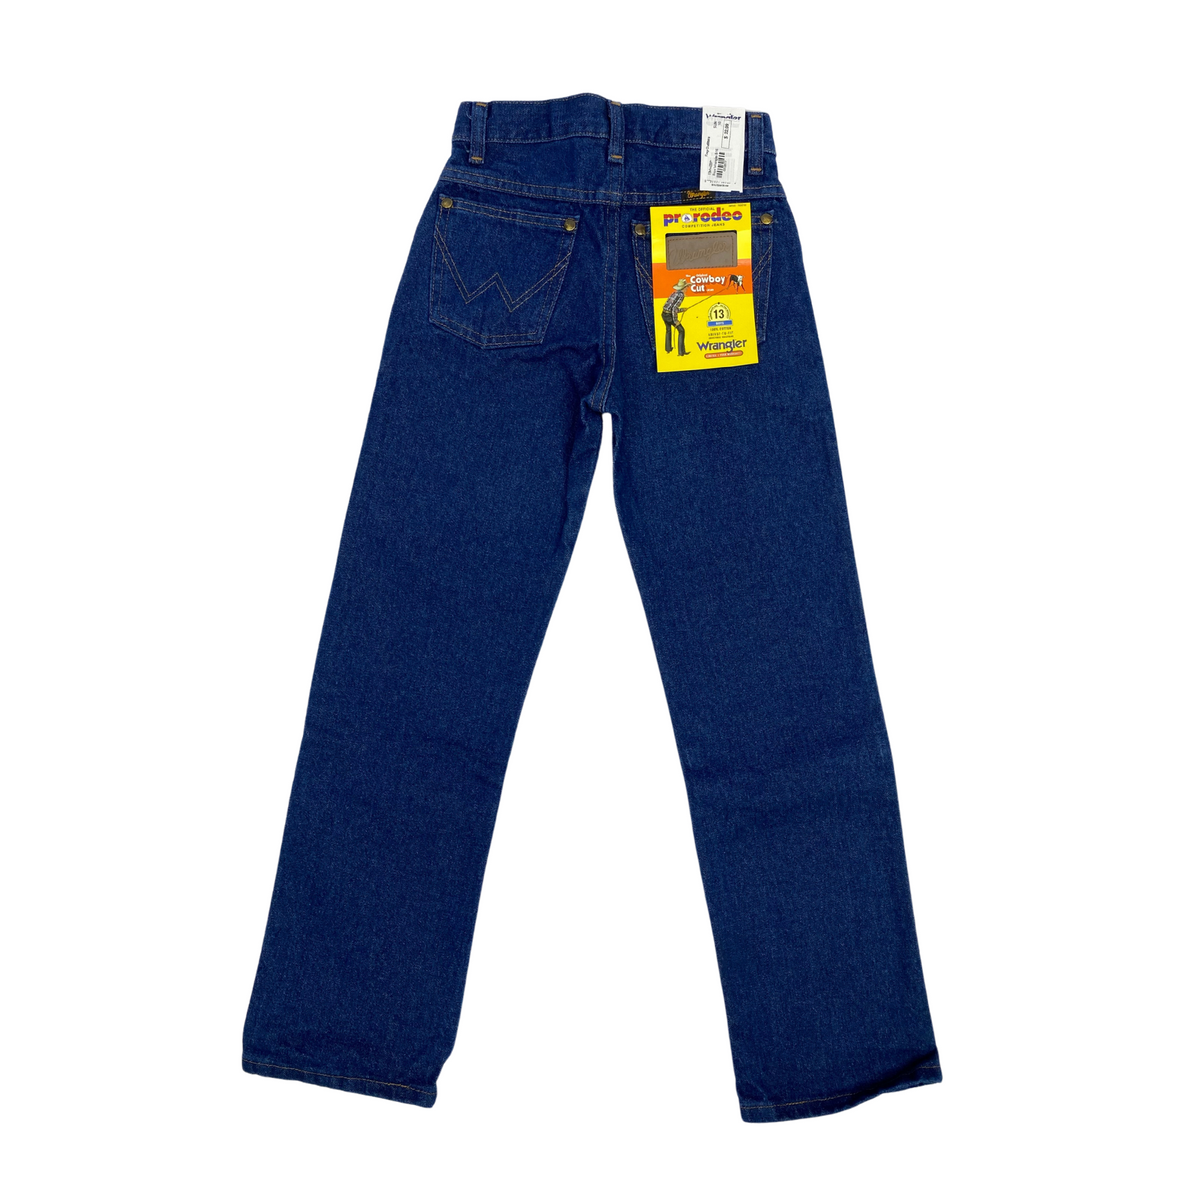 Boy's Wrangler Cowboy Cut Original Fit Prewashed Jeans Husky (8-18)